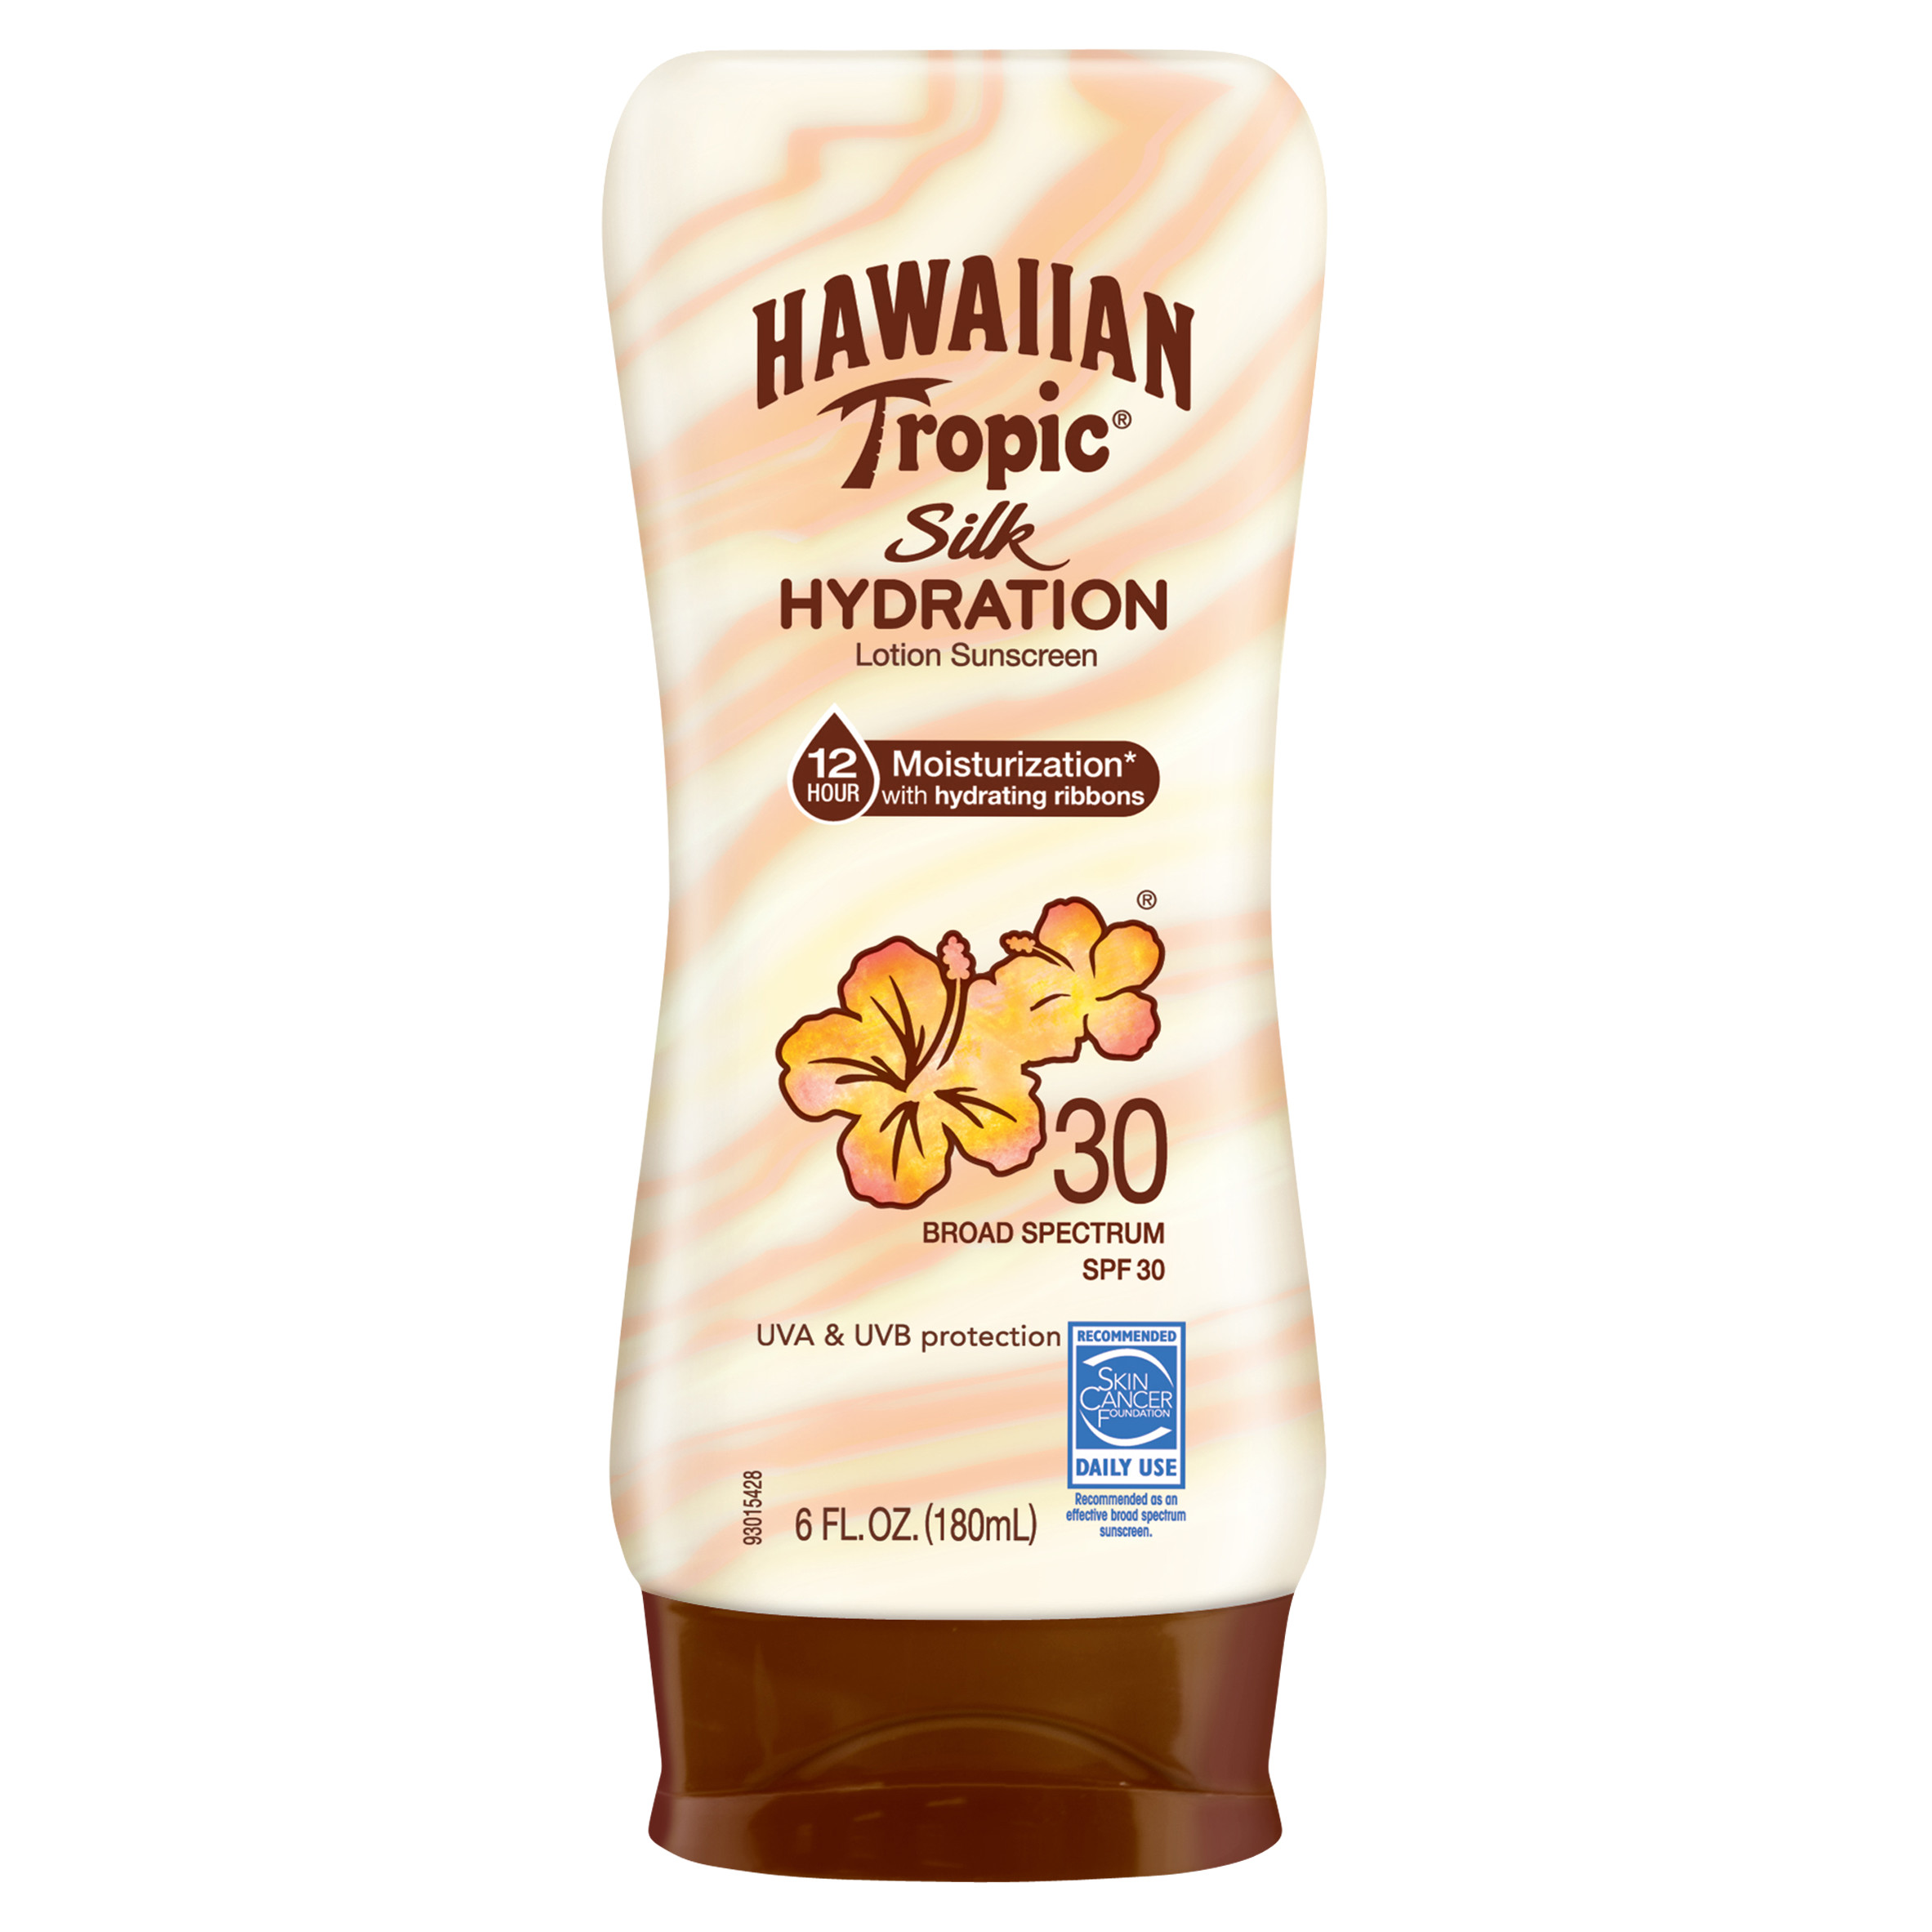 Hawaiian Tropic Silk Hydration Lotion Sunscreen Broad Spectrum SPF 30 - 6 fl oz - image 1 of 4